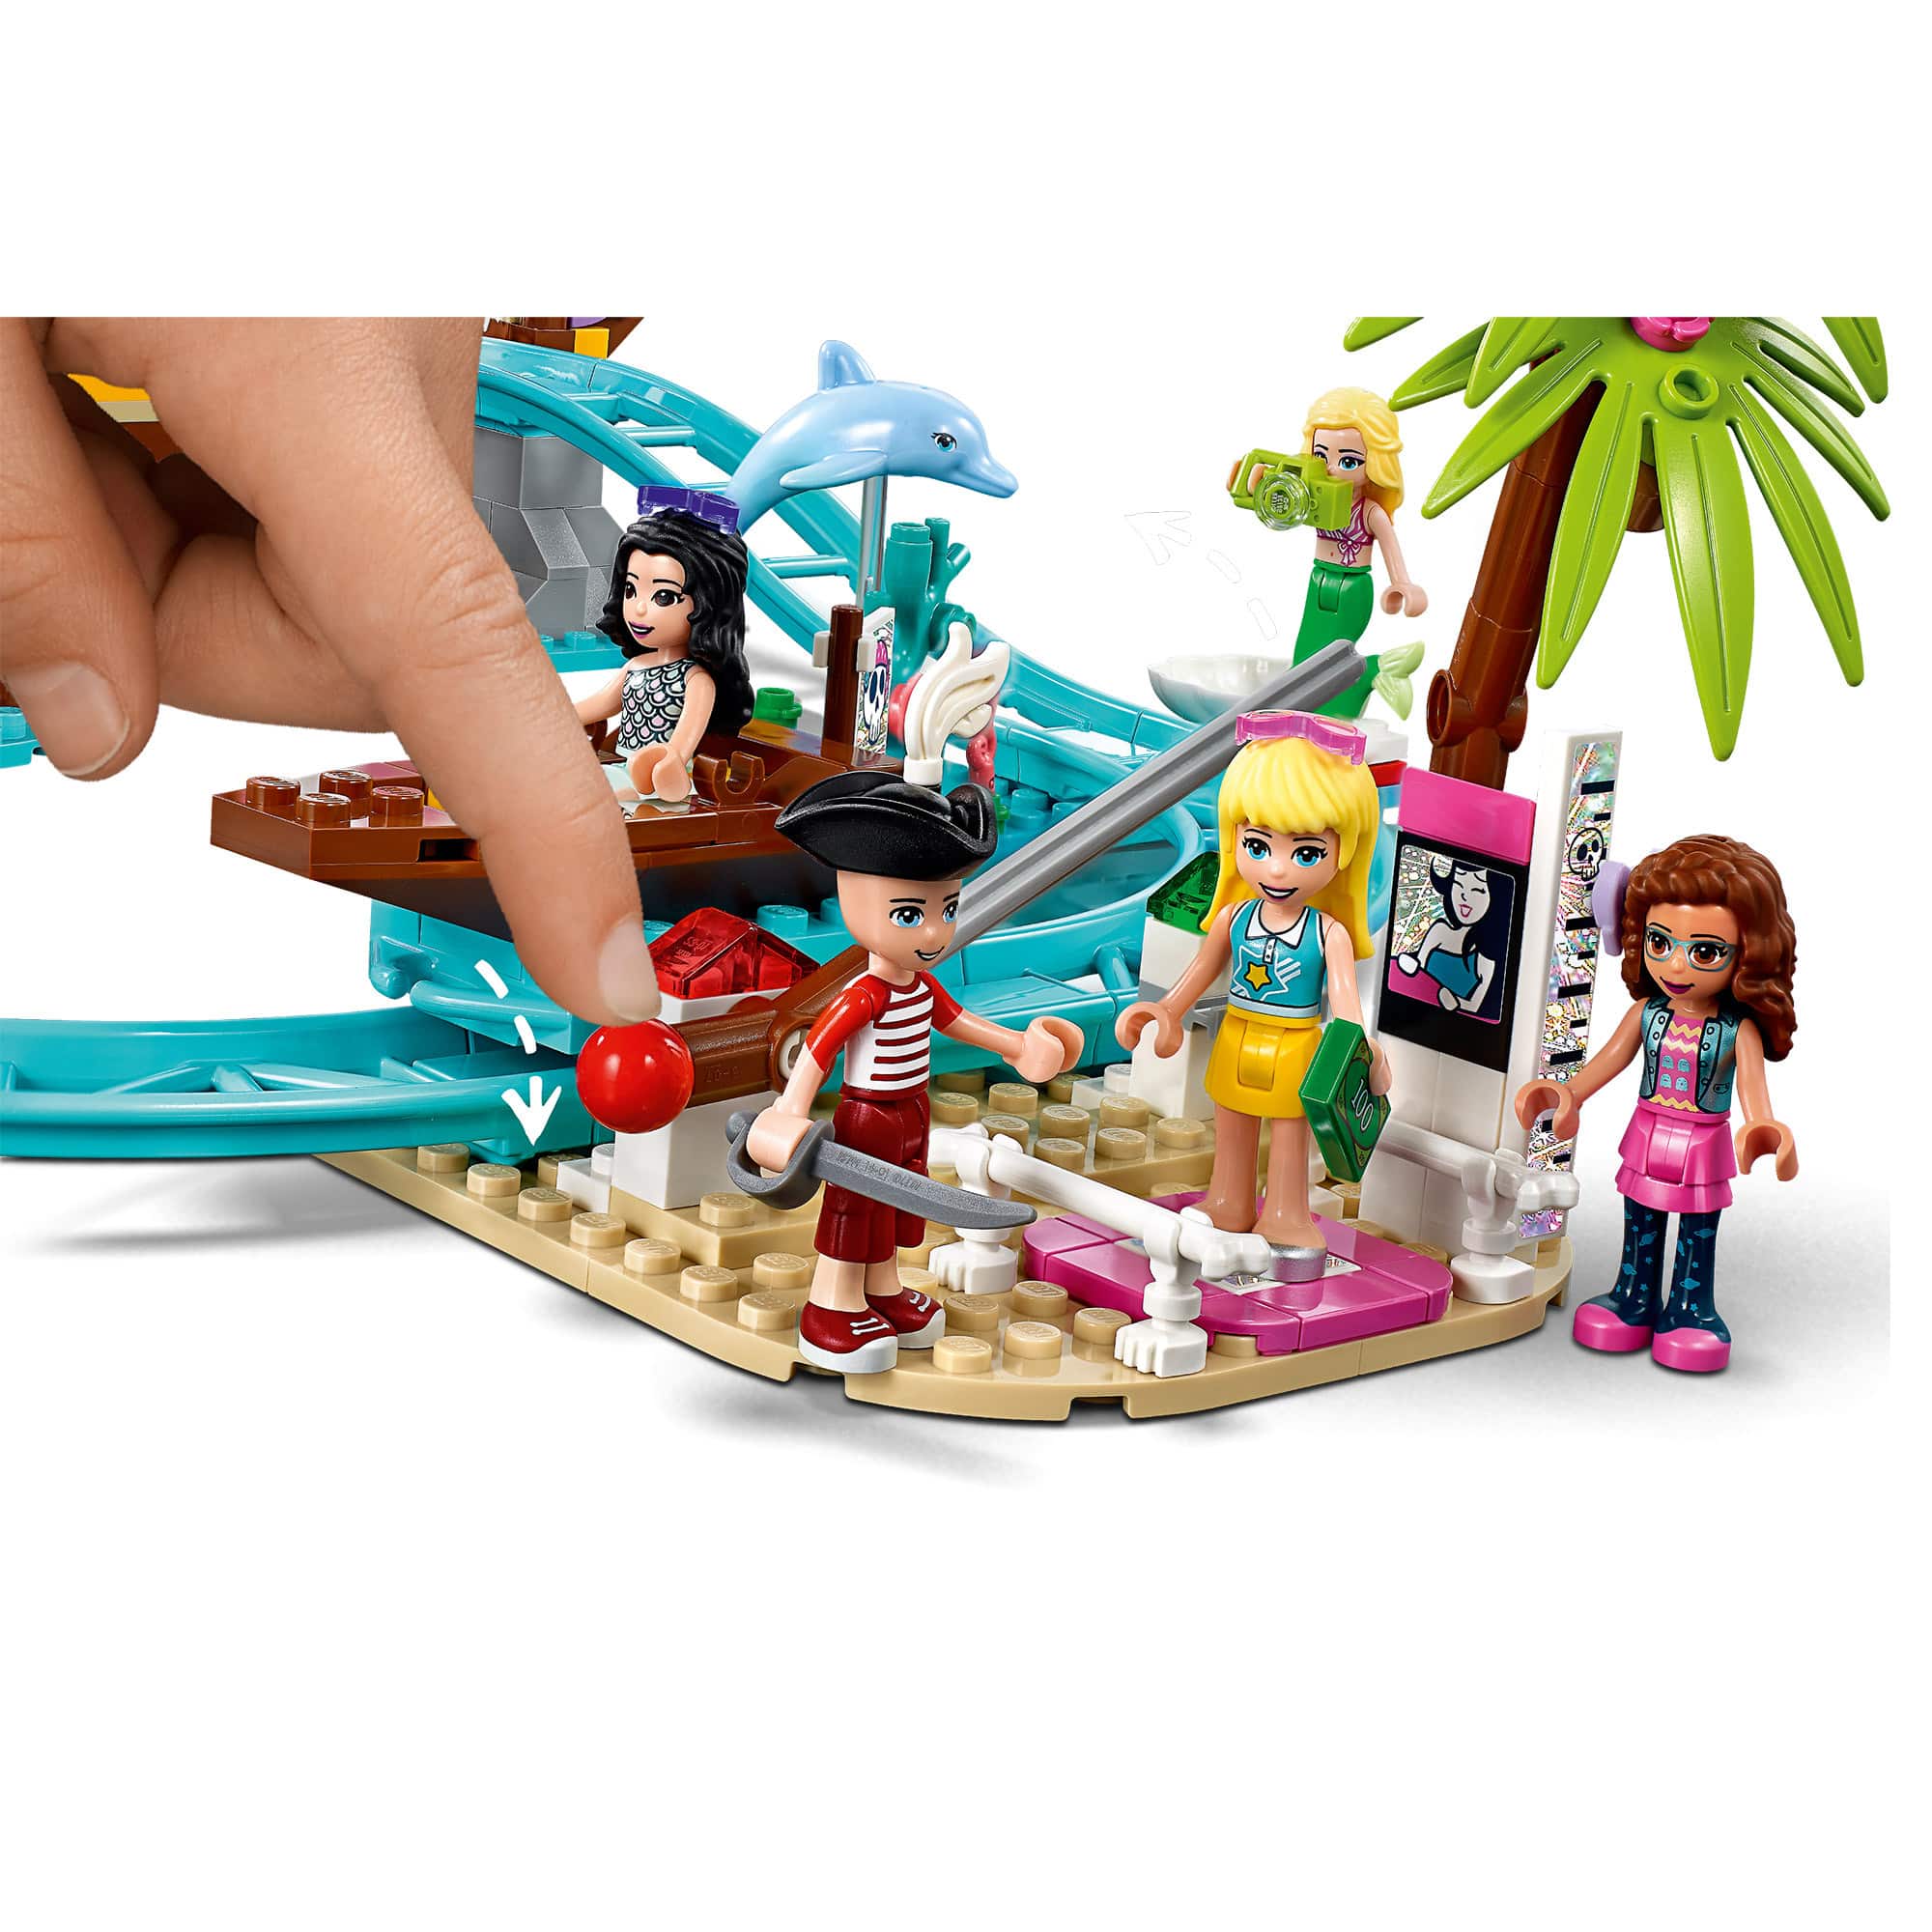 LEGO Friends 41375 - Heartlake City Amusement Pier